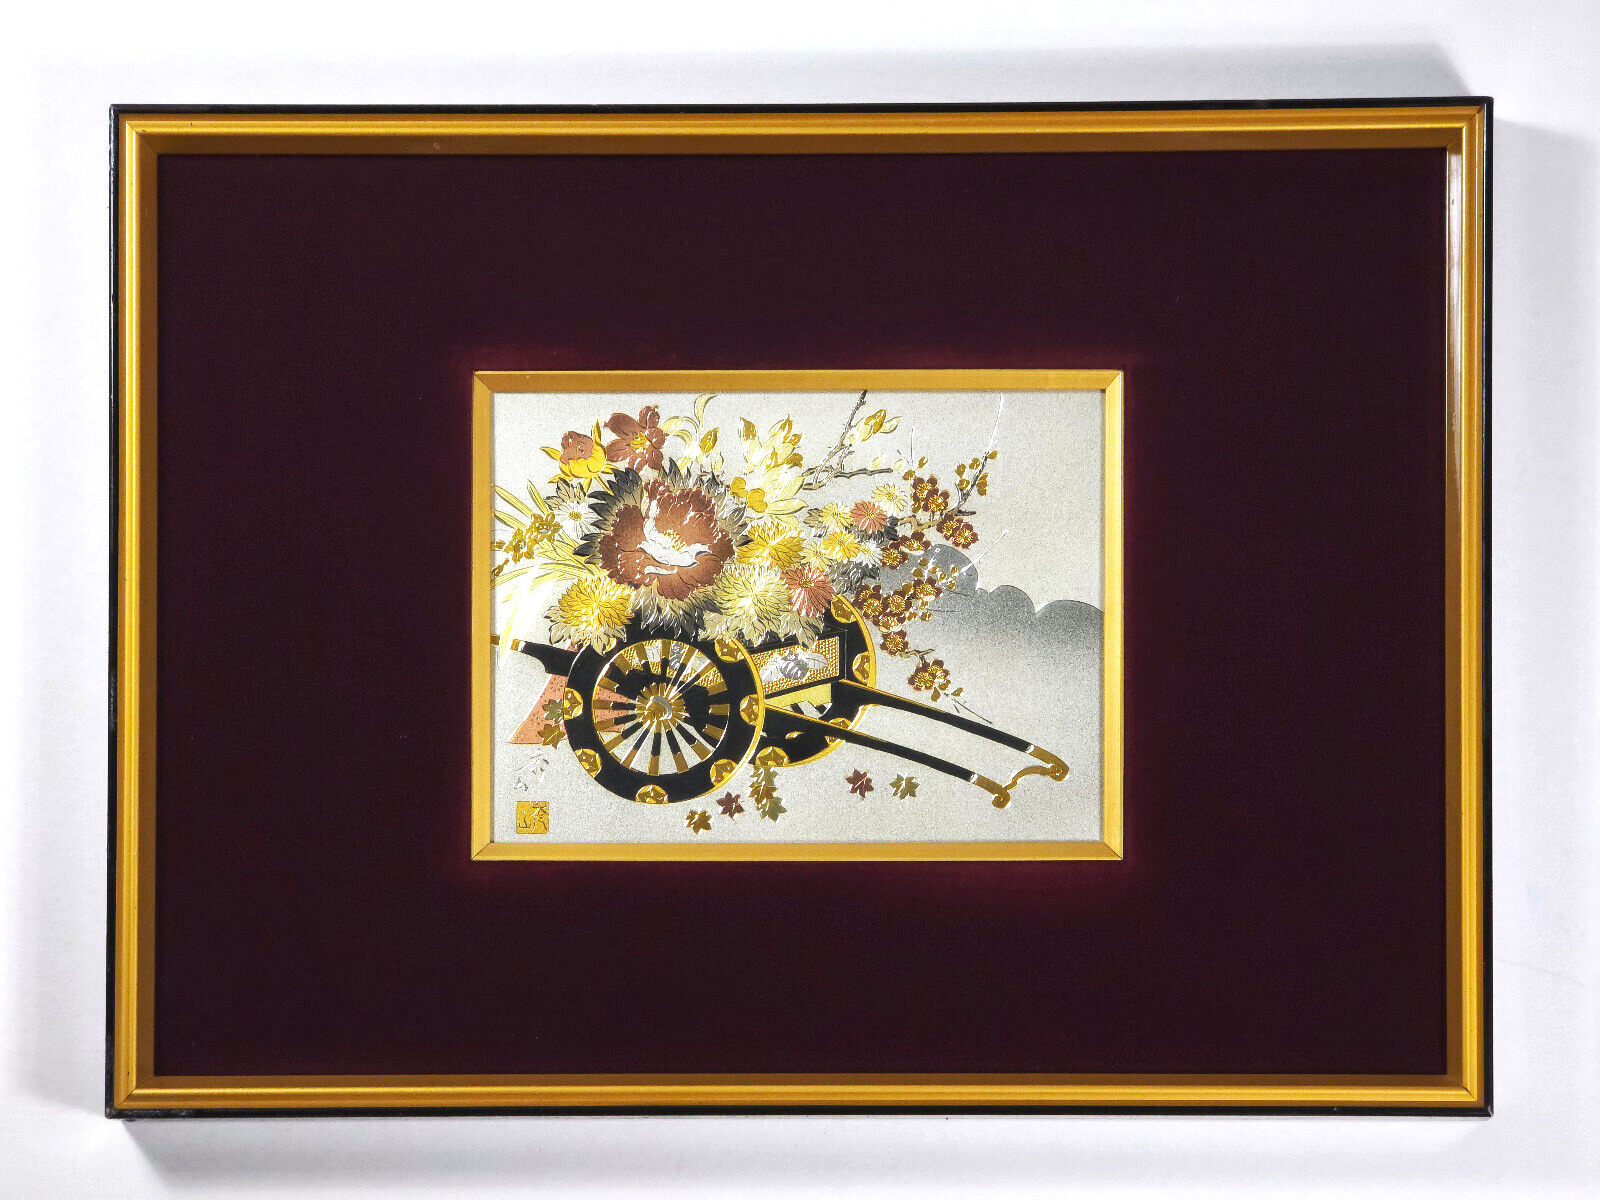 Lin Art Chokin Red Velvet Mat Framed Floral Flower Cart Engraved Silver Gold